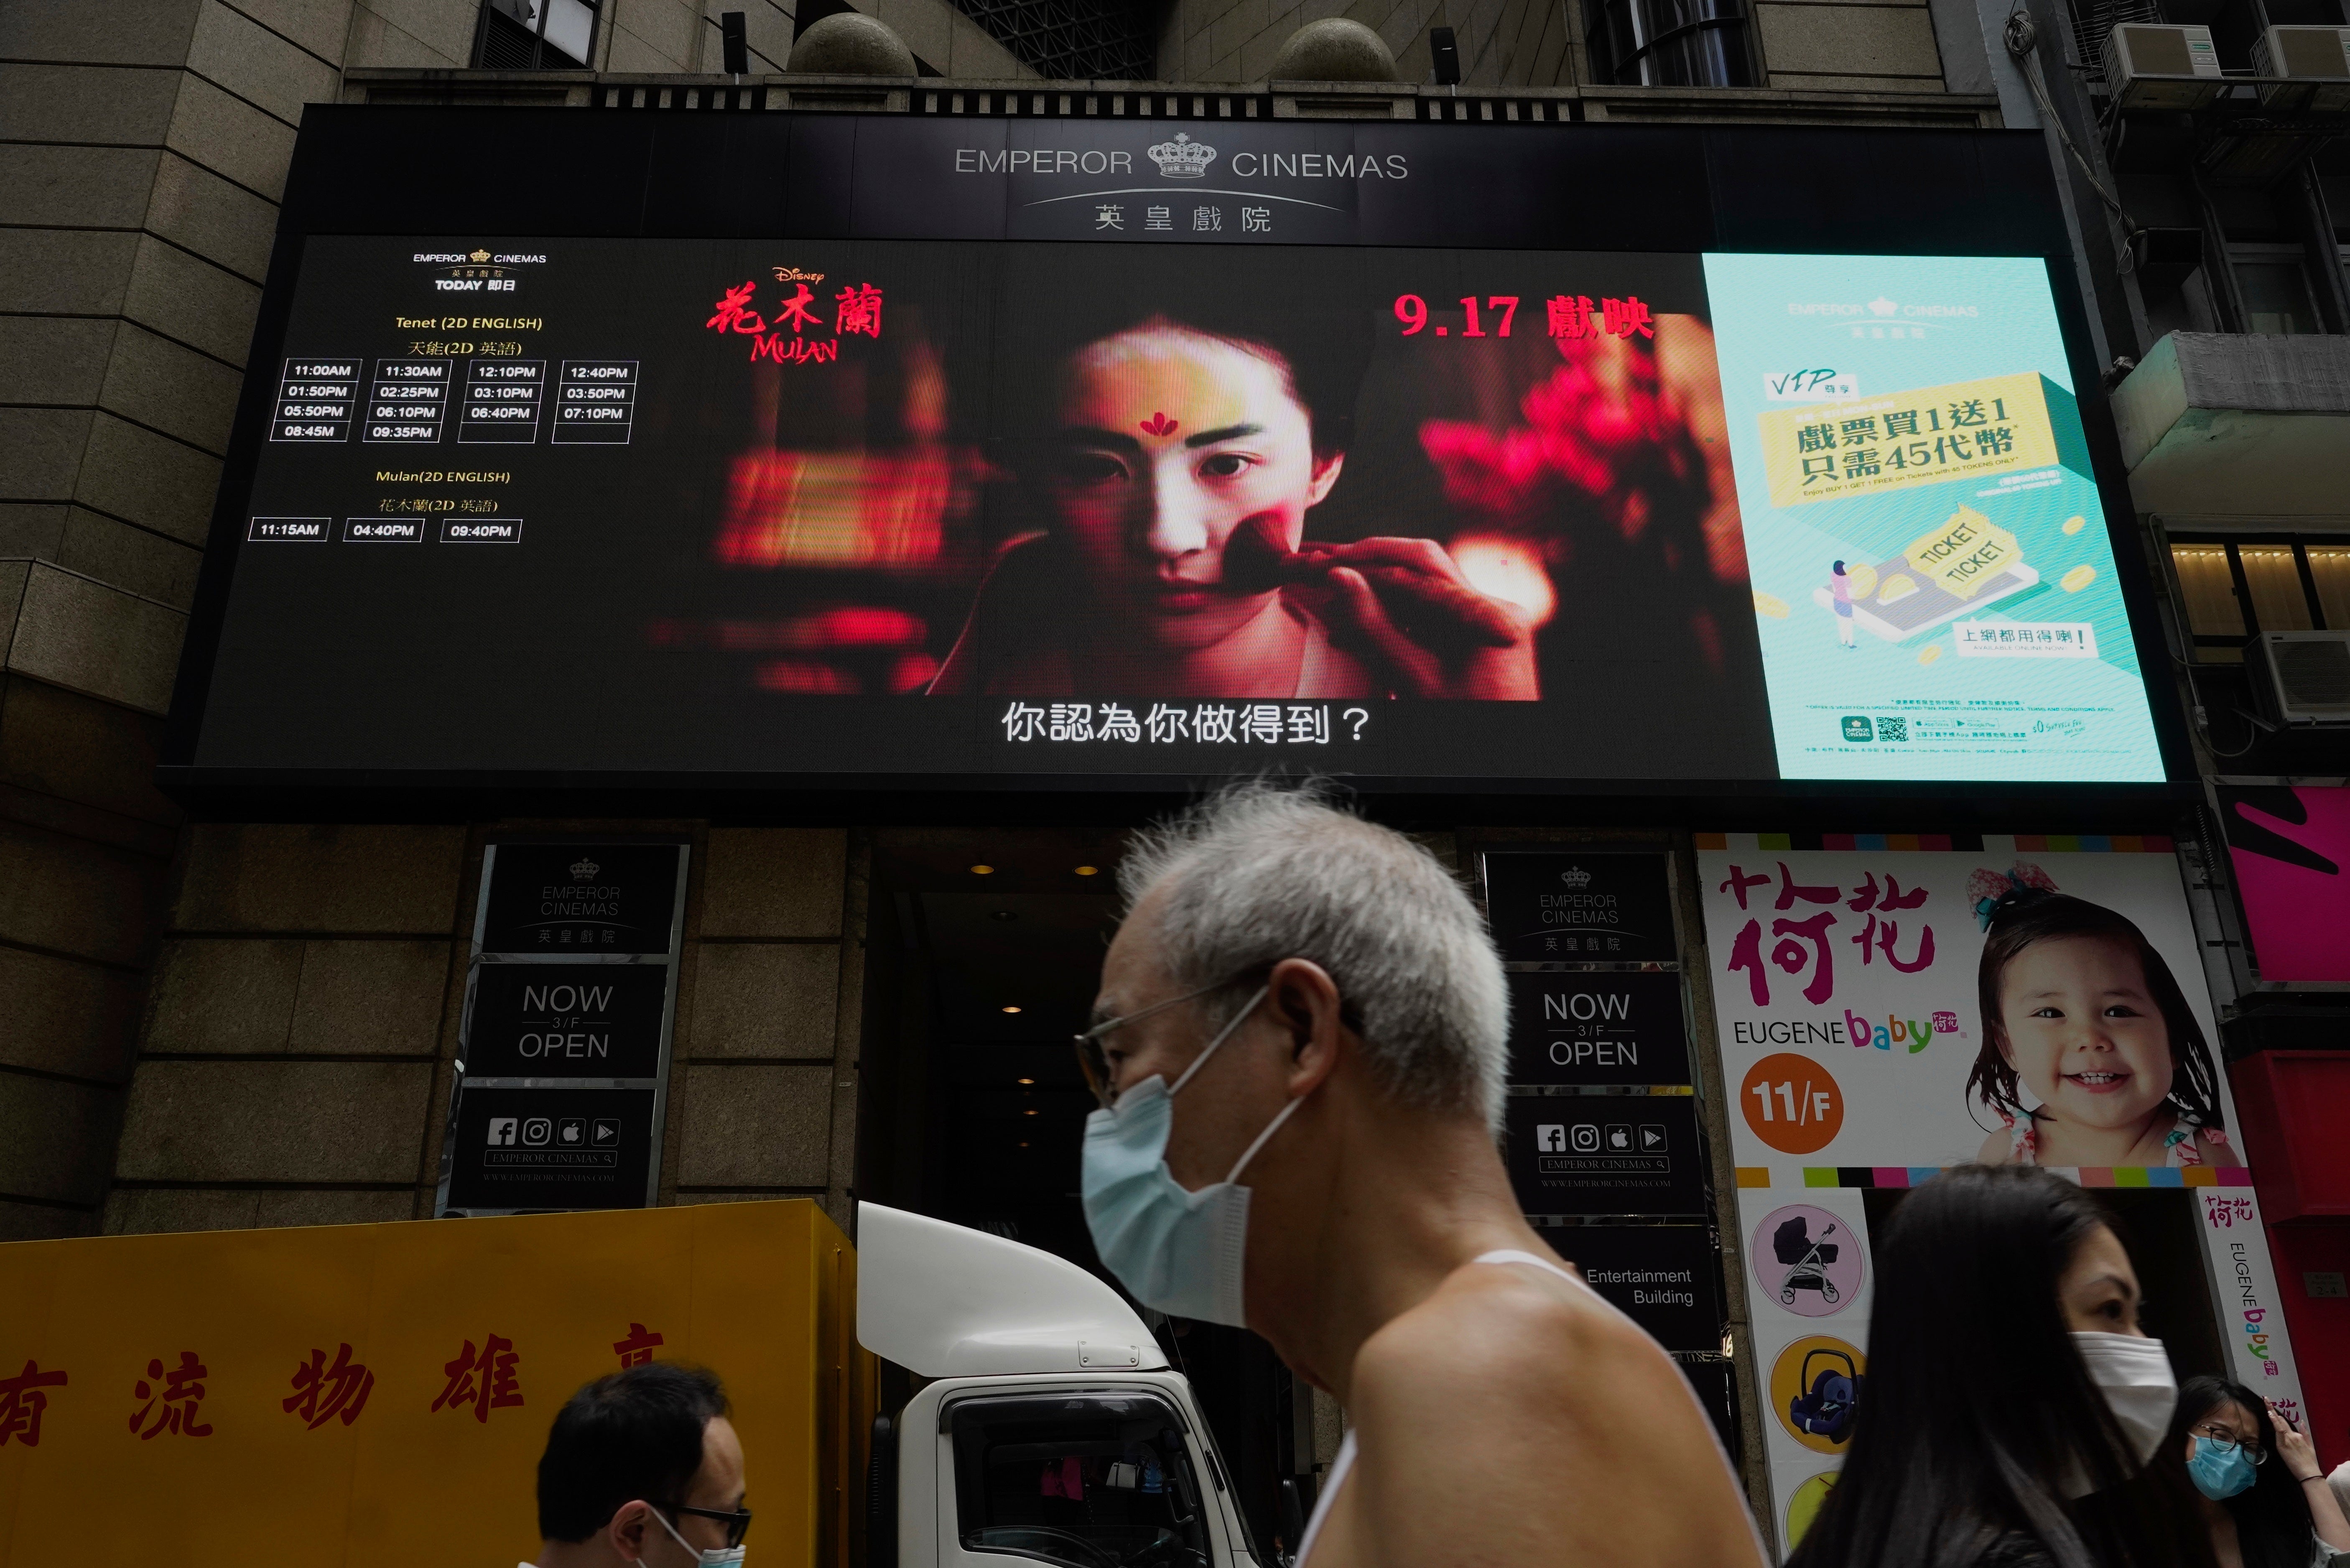 Hong Kong Film Censorship